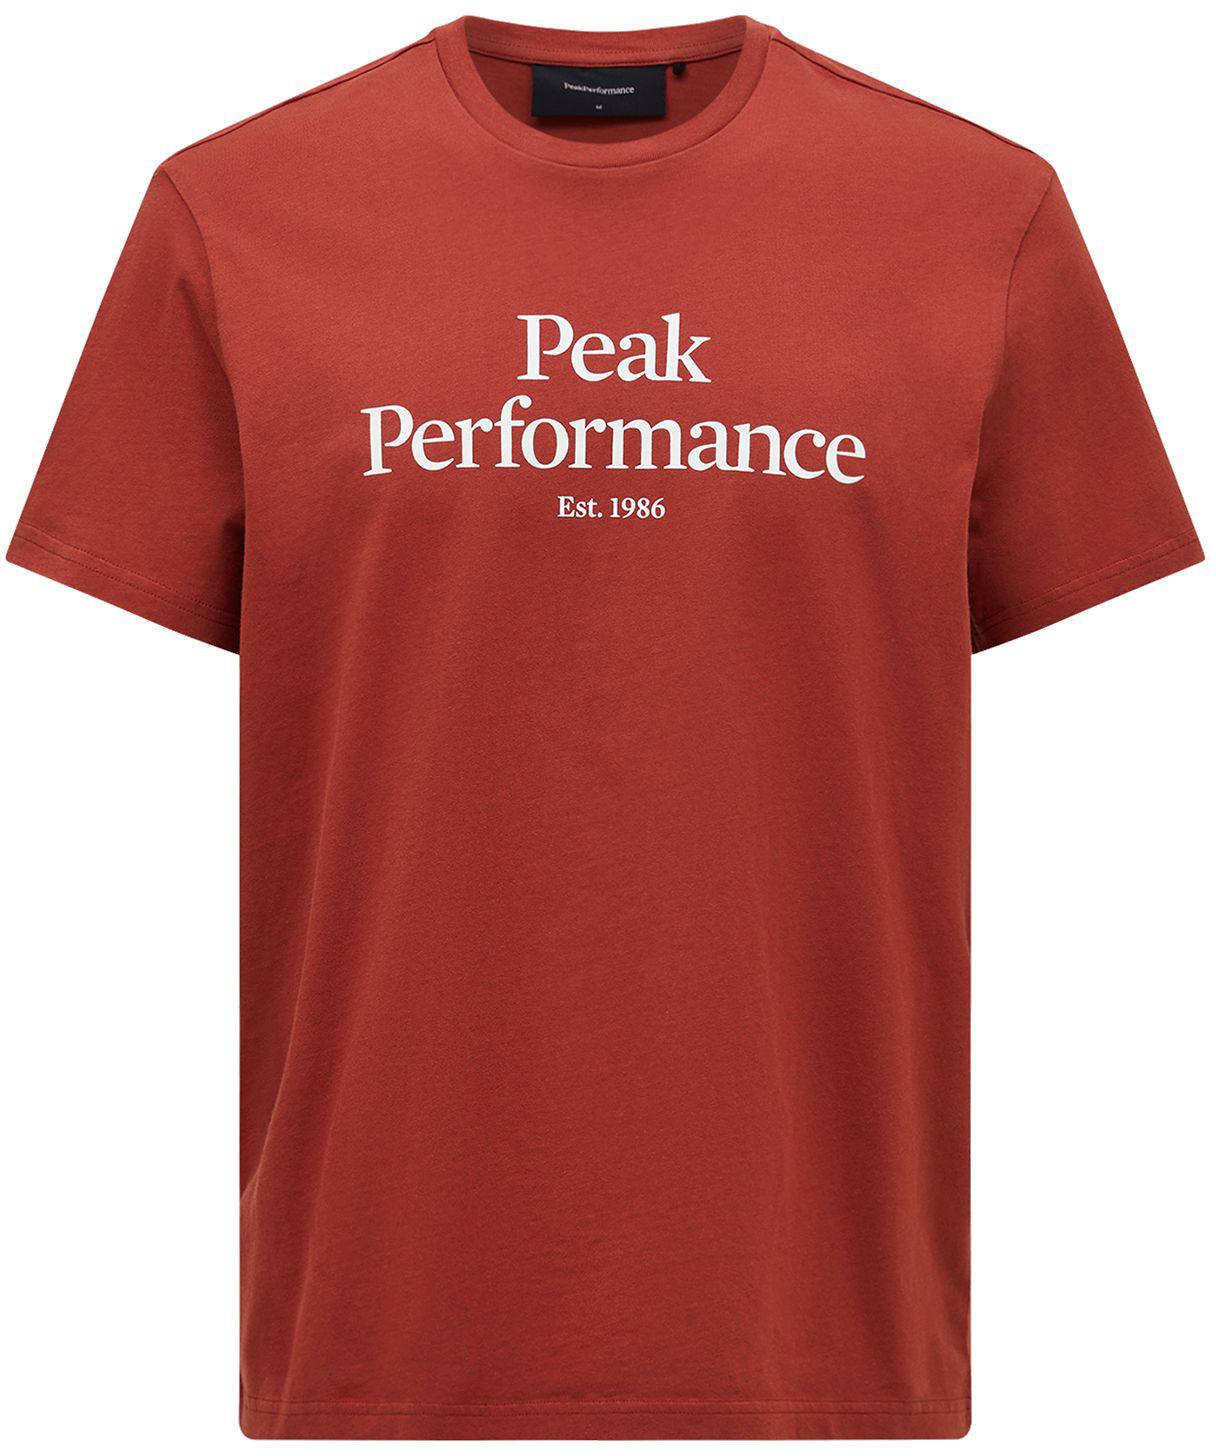 Peak Performance Men's Original Tee